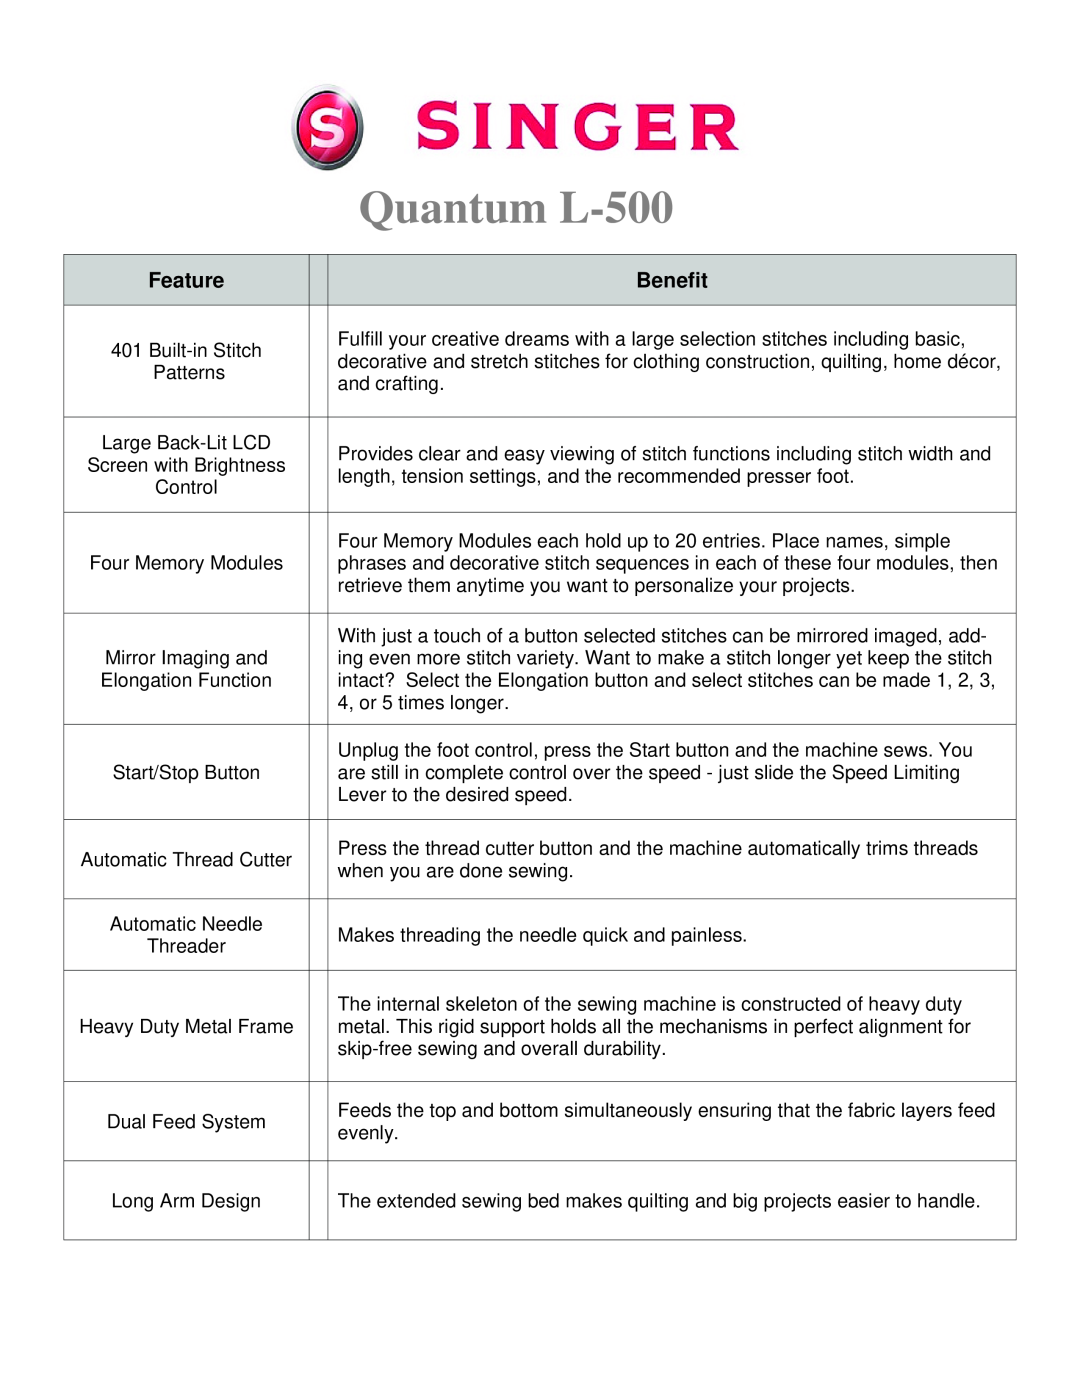 Singer manual Quantum L-500, Feature, Benefit 